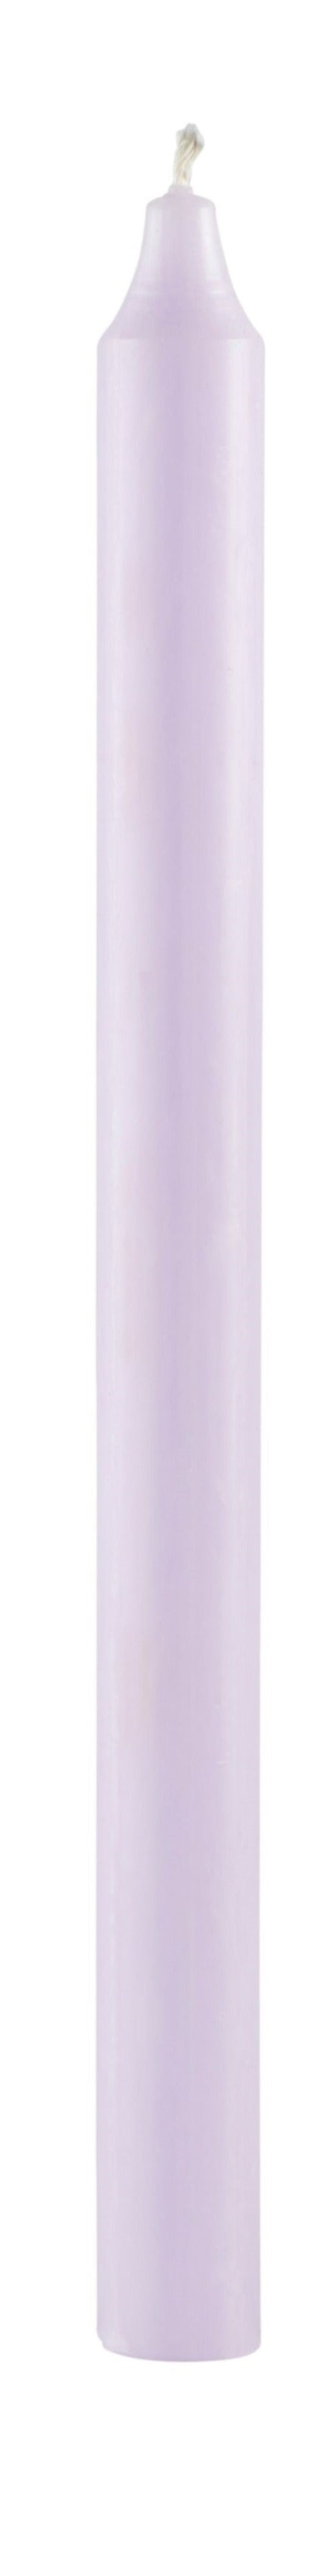 Rustik stagelys, Lys lilla, 29 cm.